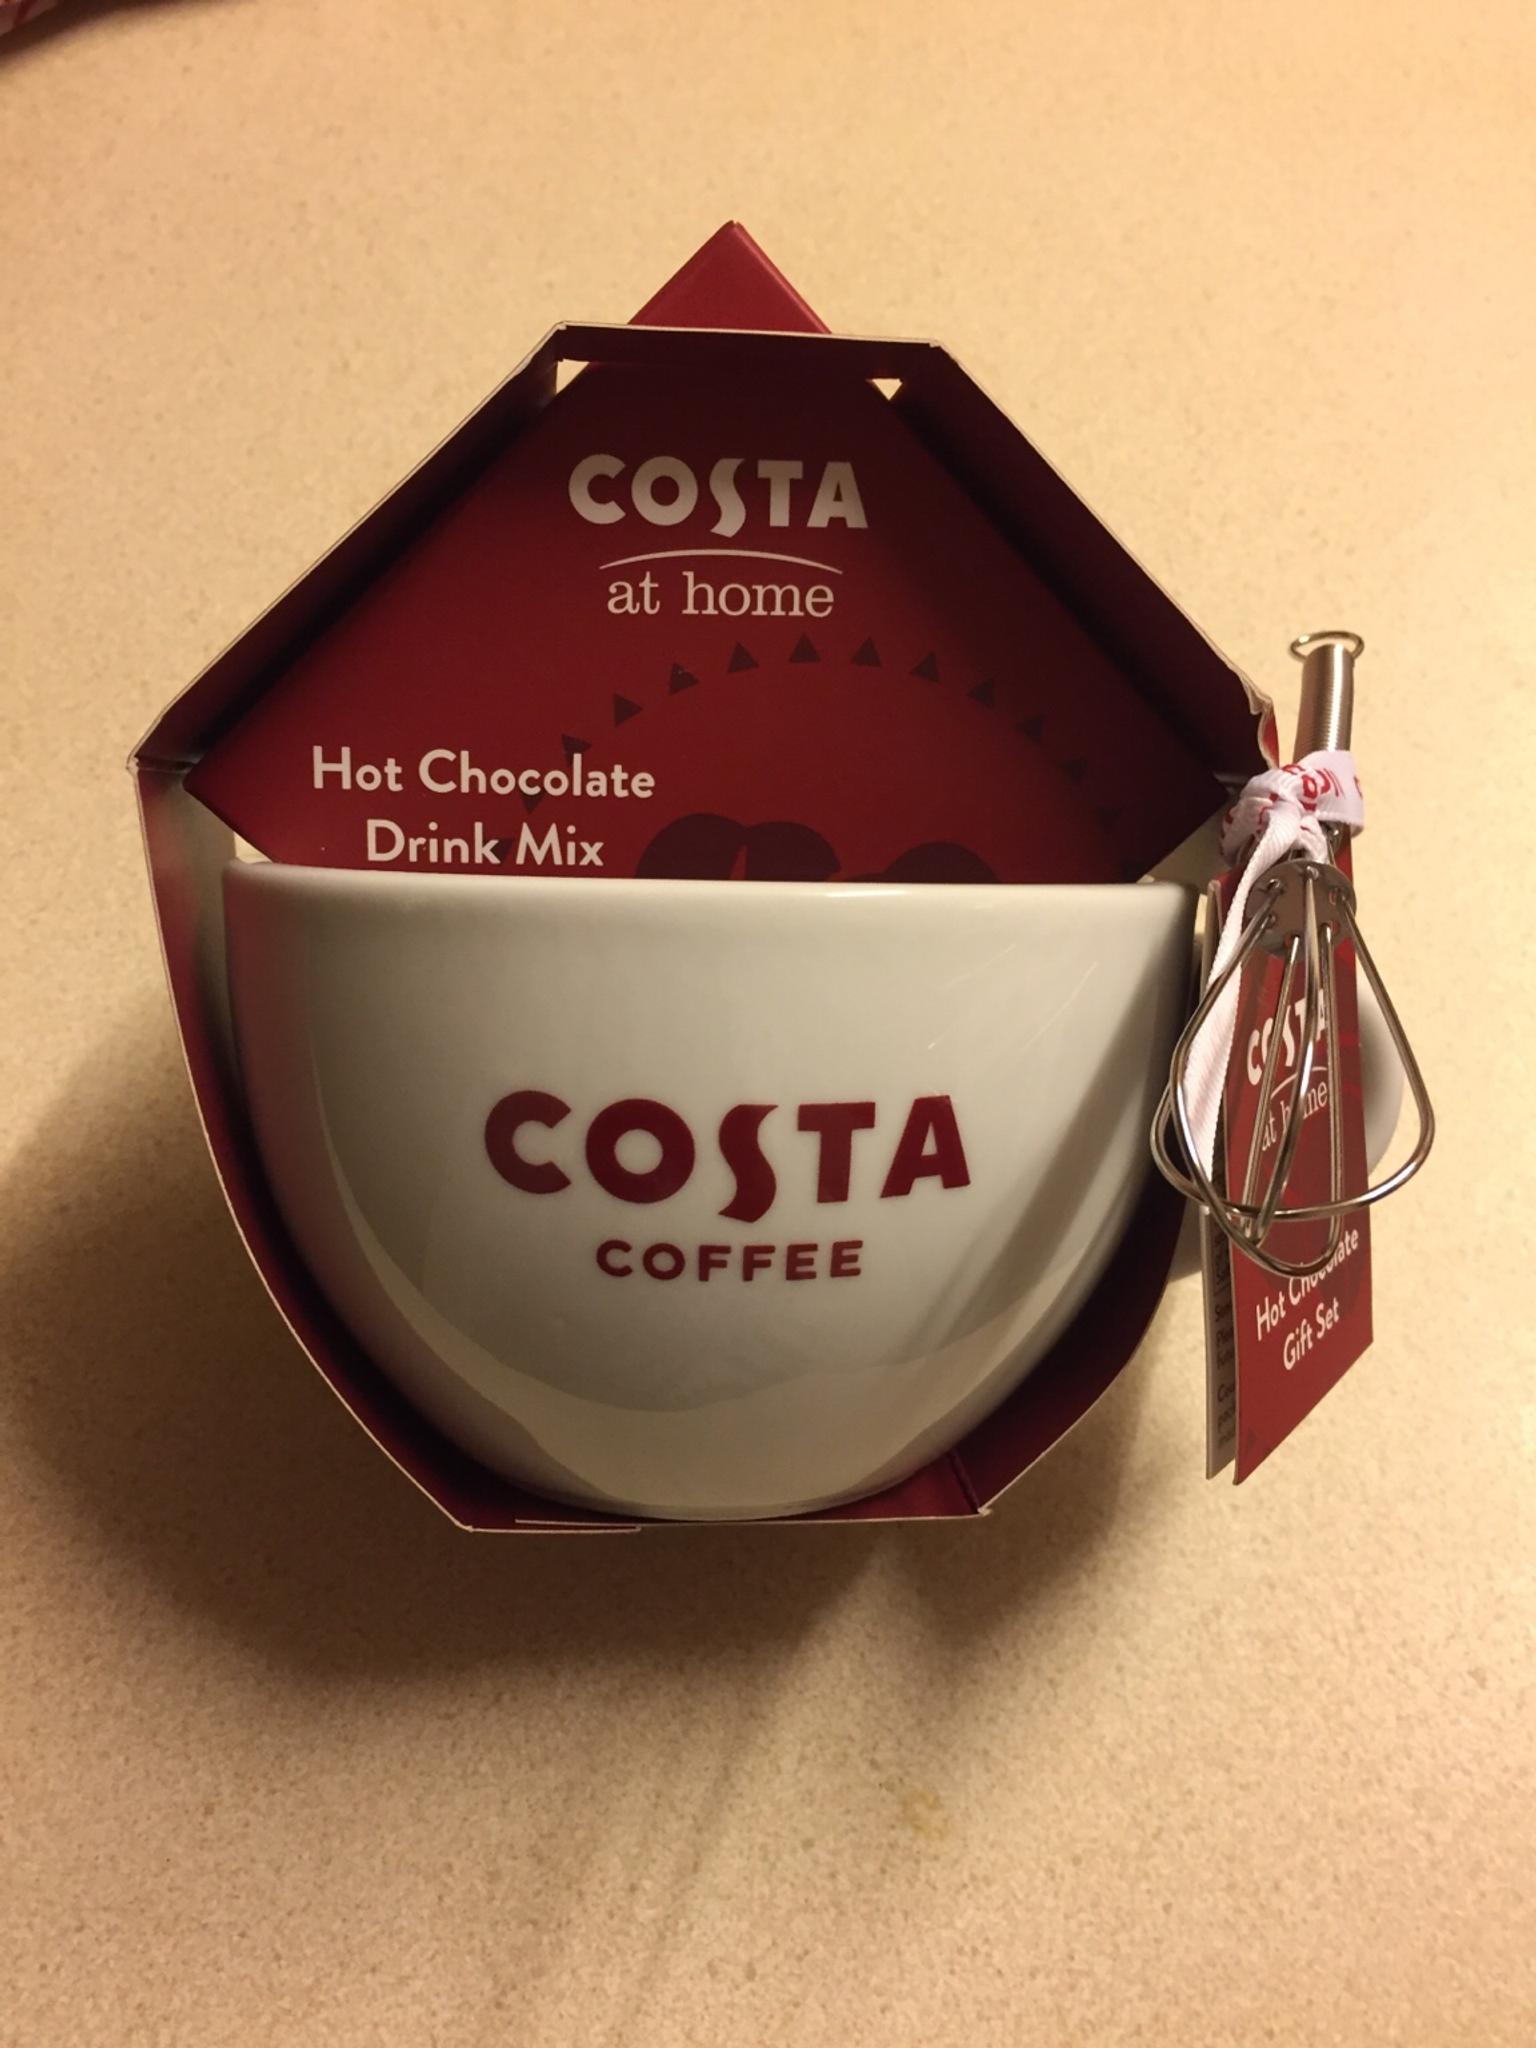 New Costa Coffee mug and hot choc gift set £5 in WS2